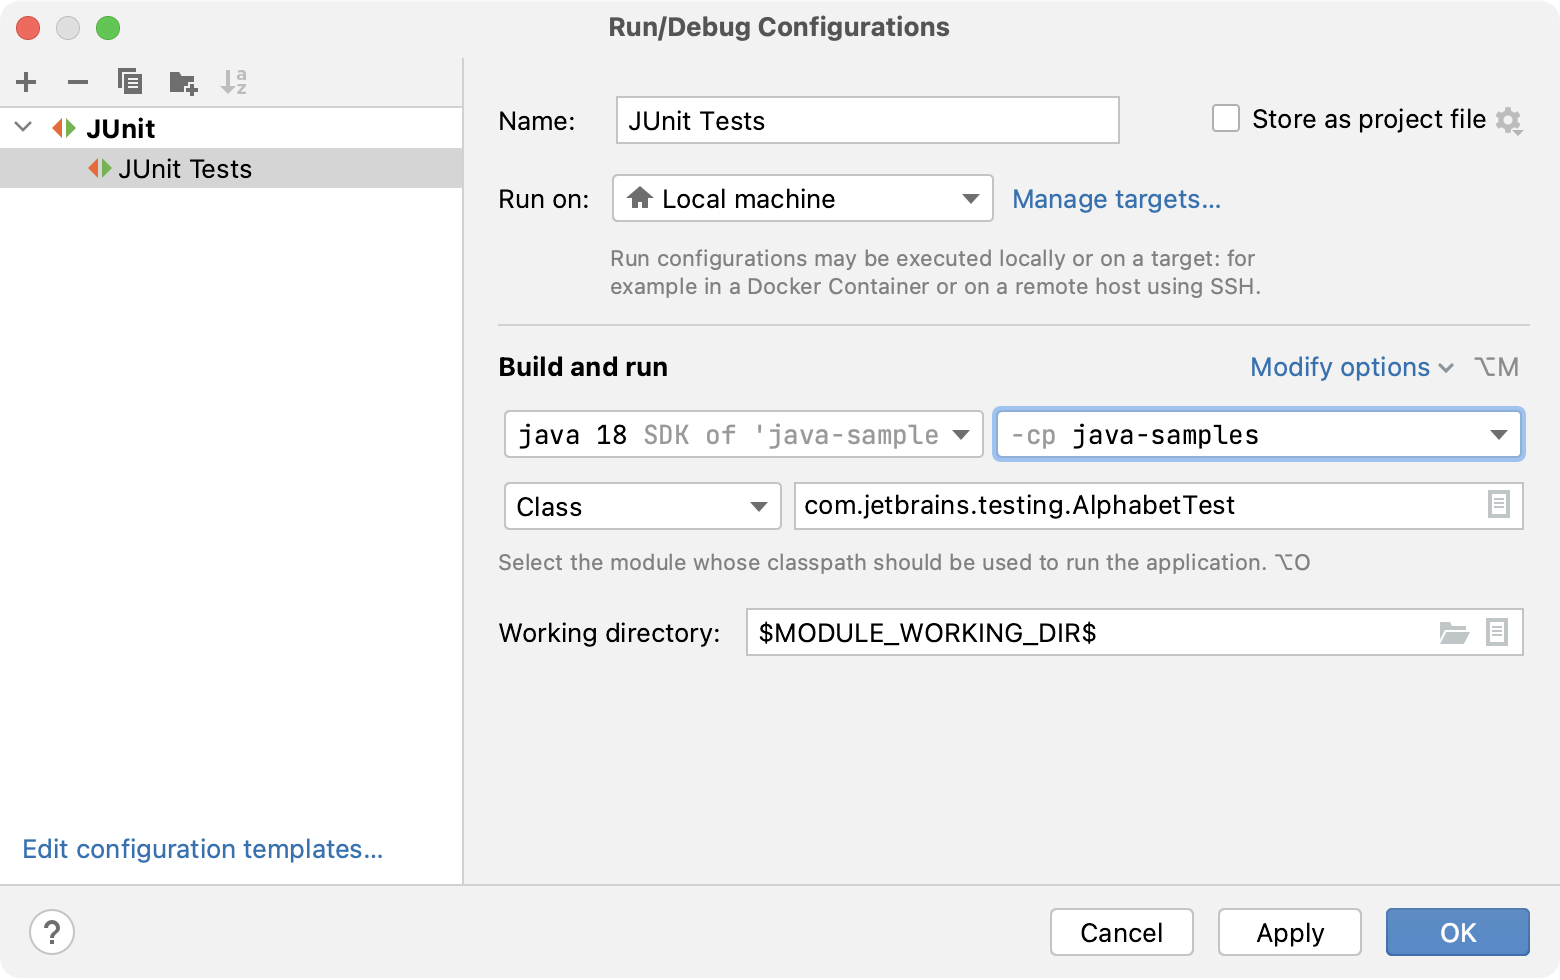 Run/Debug Configuration: JUnit